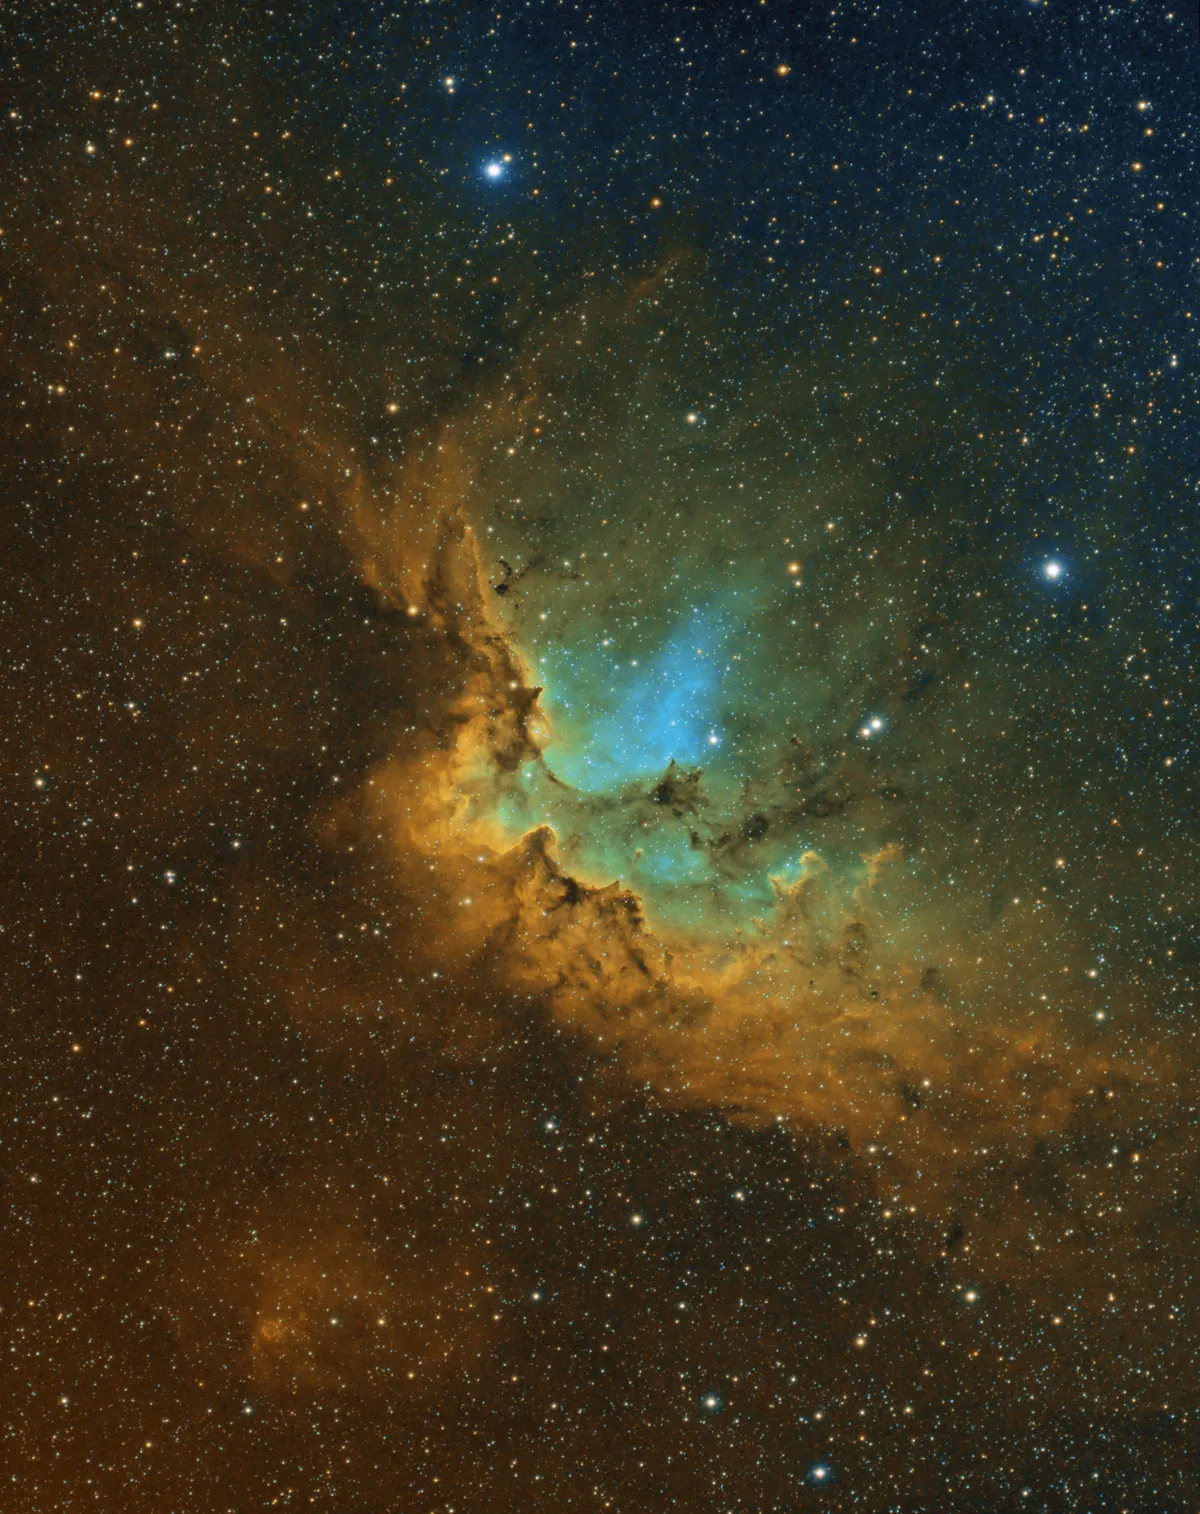 NGC7380 Wizard Nebula in HST by Chrish Heapy, Macclesfield, UK. Equipment: TV NP127is, Atik490EX, 10-Micron GM2000HPS-II, unguided, Astrodon 3nm Ha, OIII, SII, Baader 7nM Ha